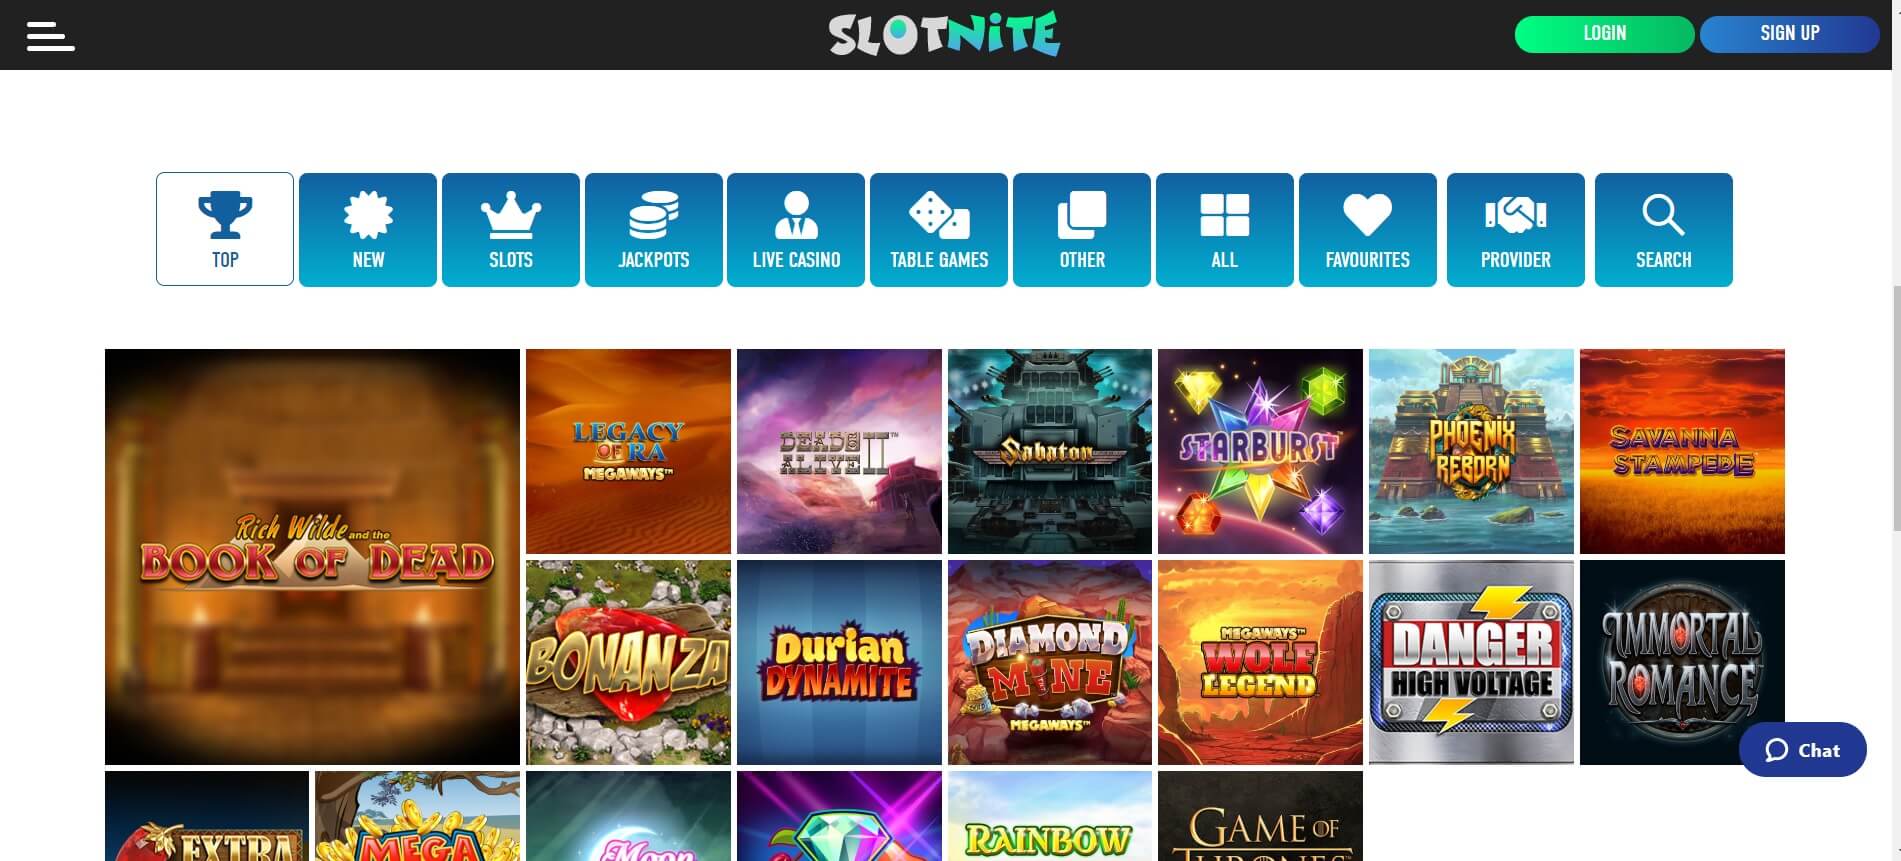 slotnite casino games and slots